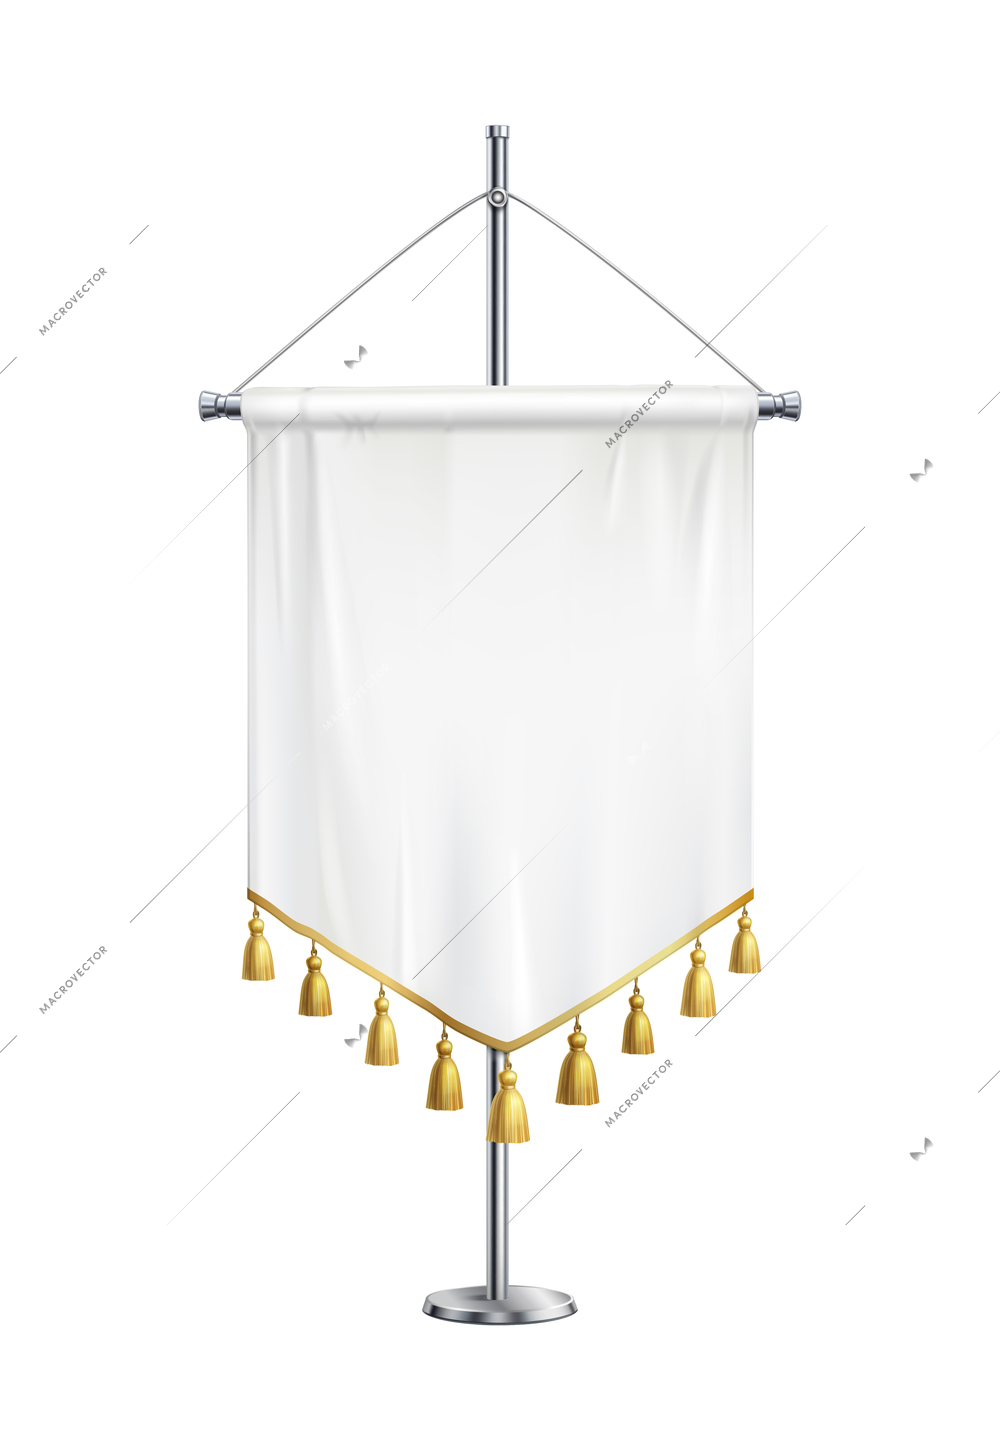 Blank white pennant with golden fringe on metal spire pedestal realistic vector illustration